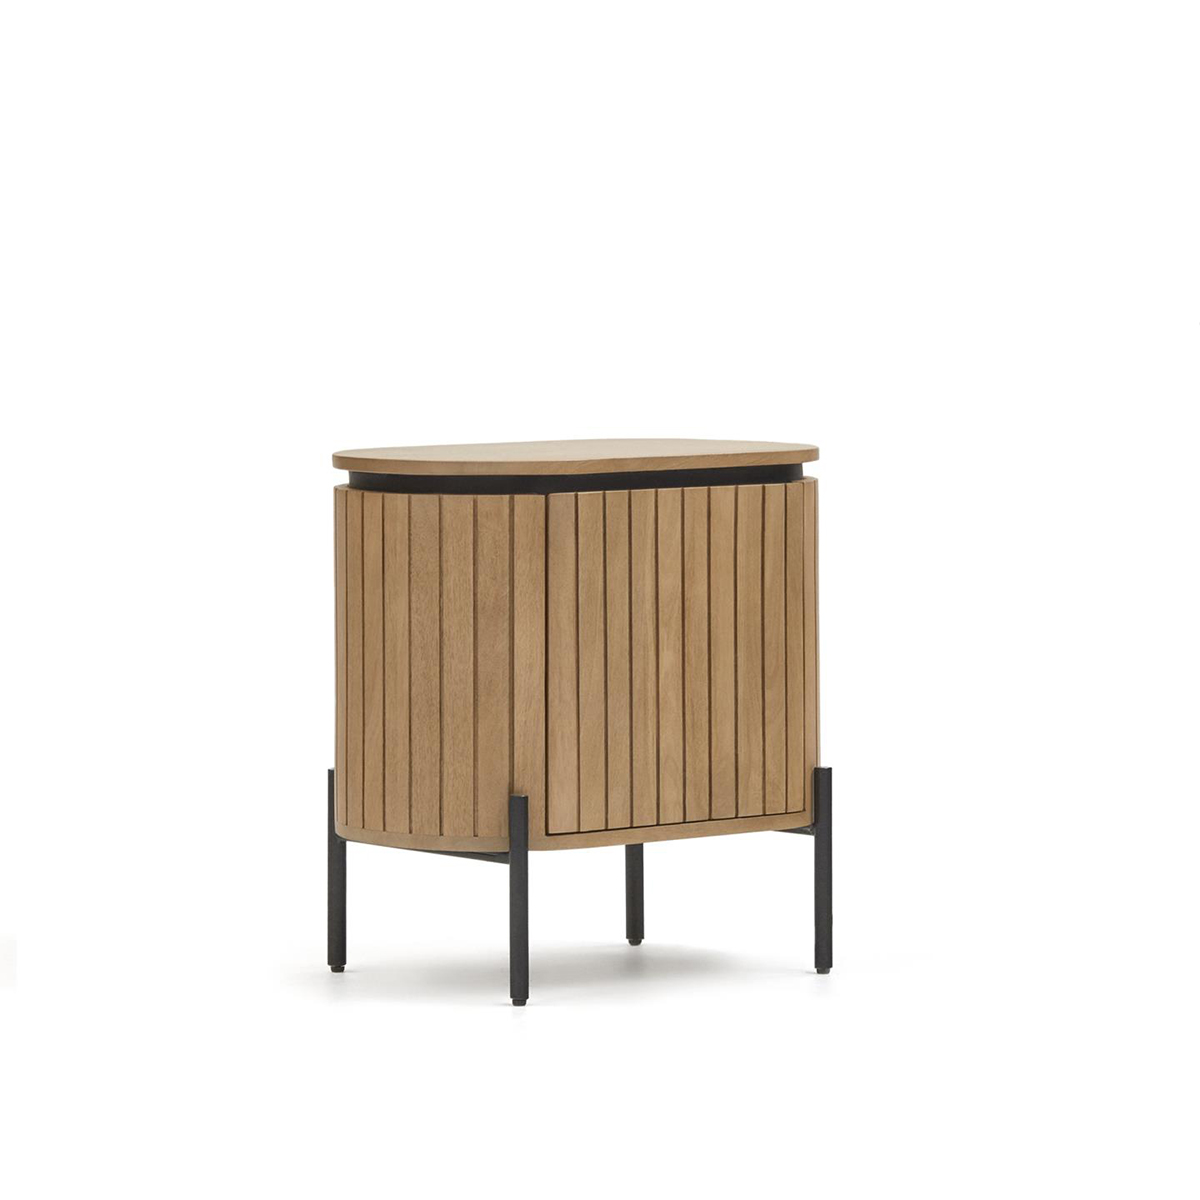 Mesita madera y metal negro - Artikalia - Muebles de diseño